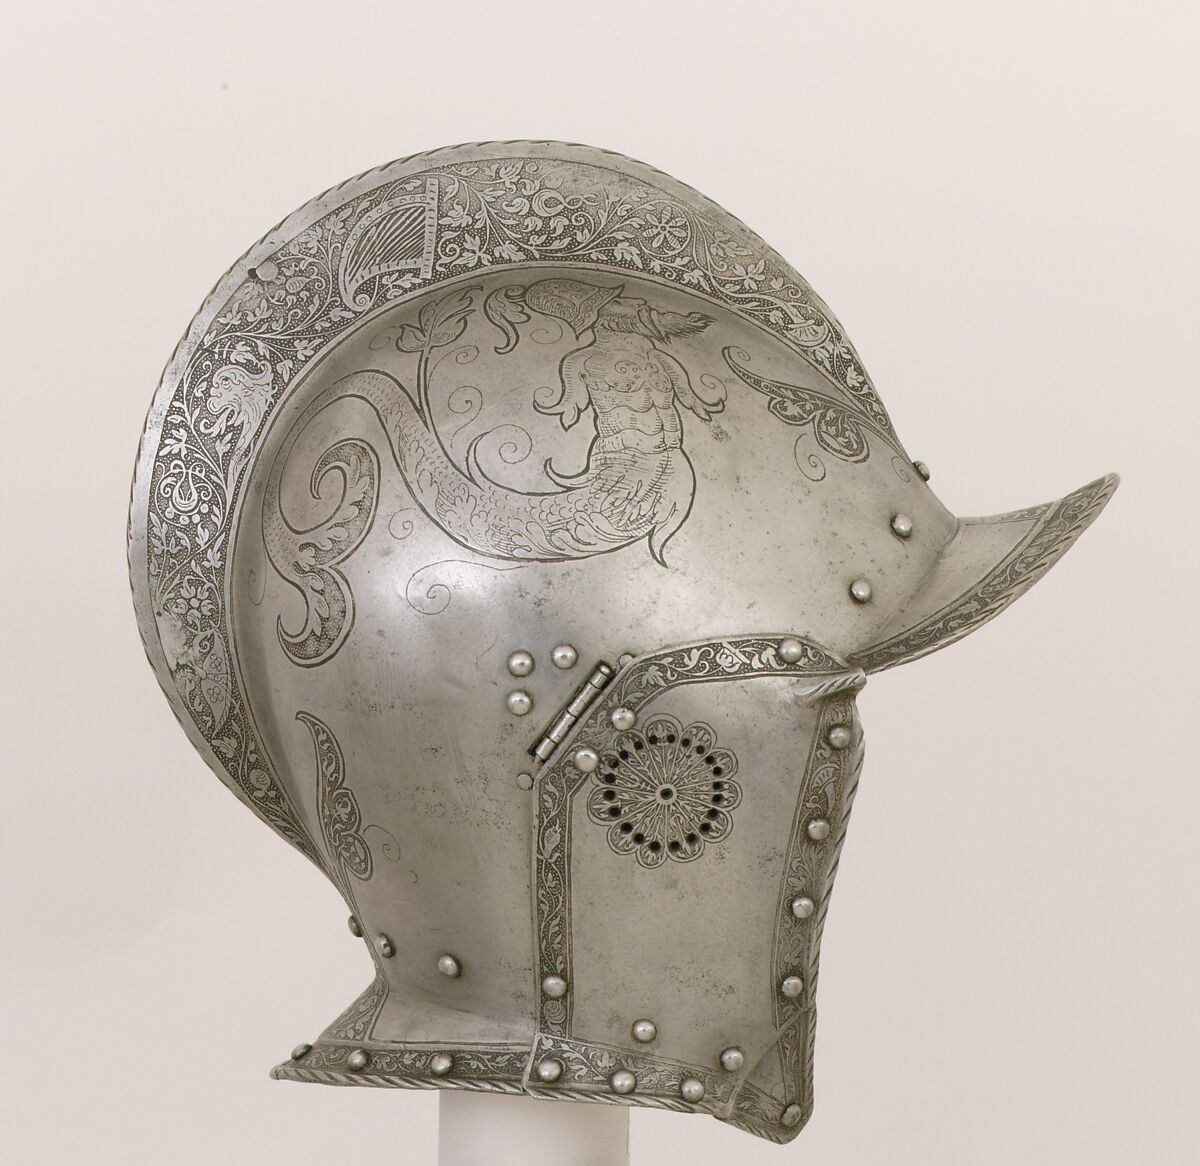 Burgonet, Attributed to Kunz Lochner (German, Nuremberg, 1510–1567), Steel, leather, textile, German, Nuremberg 